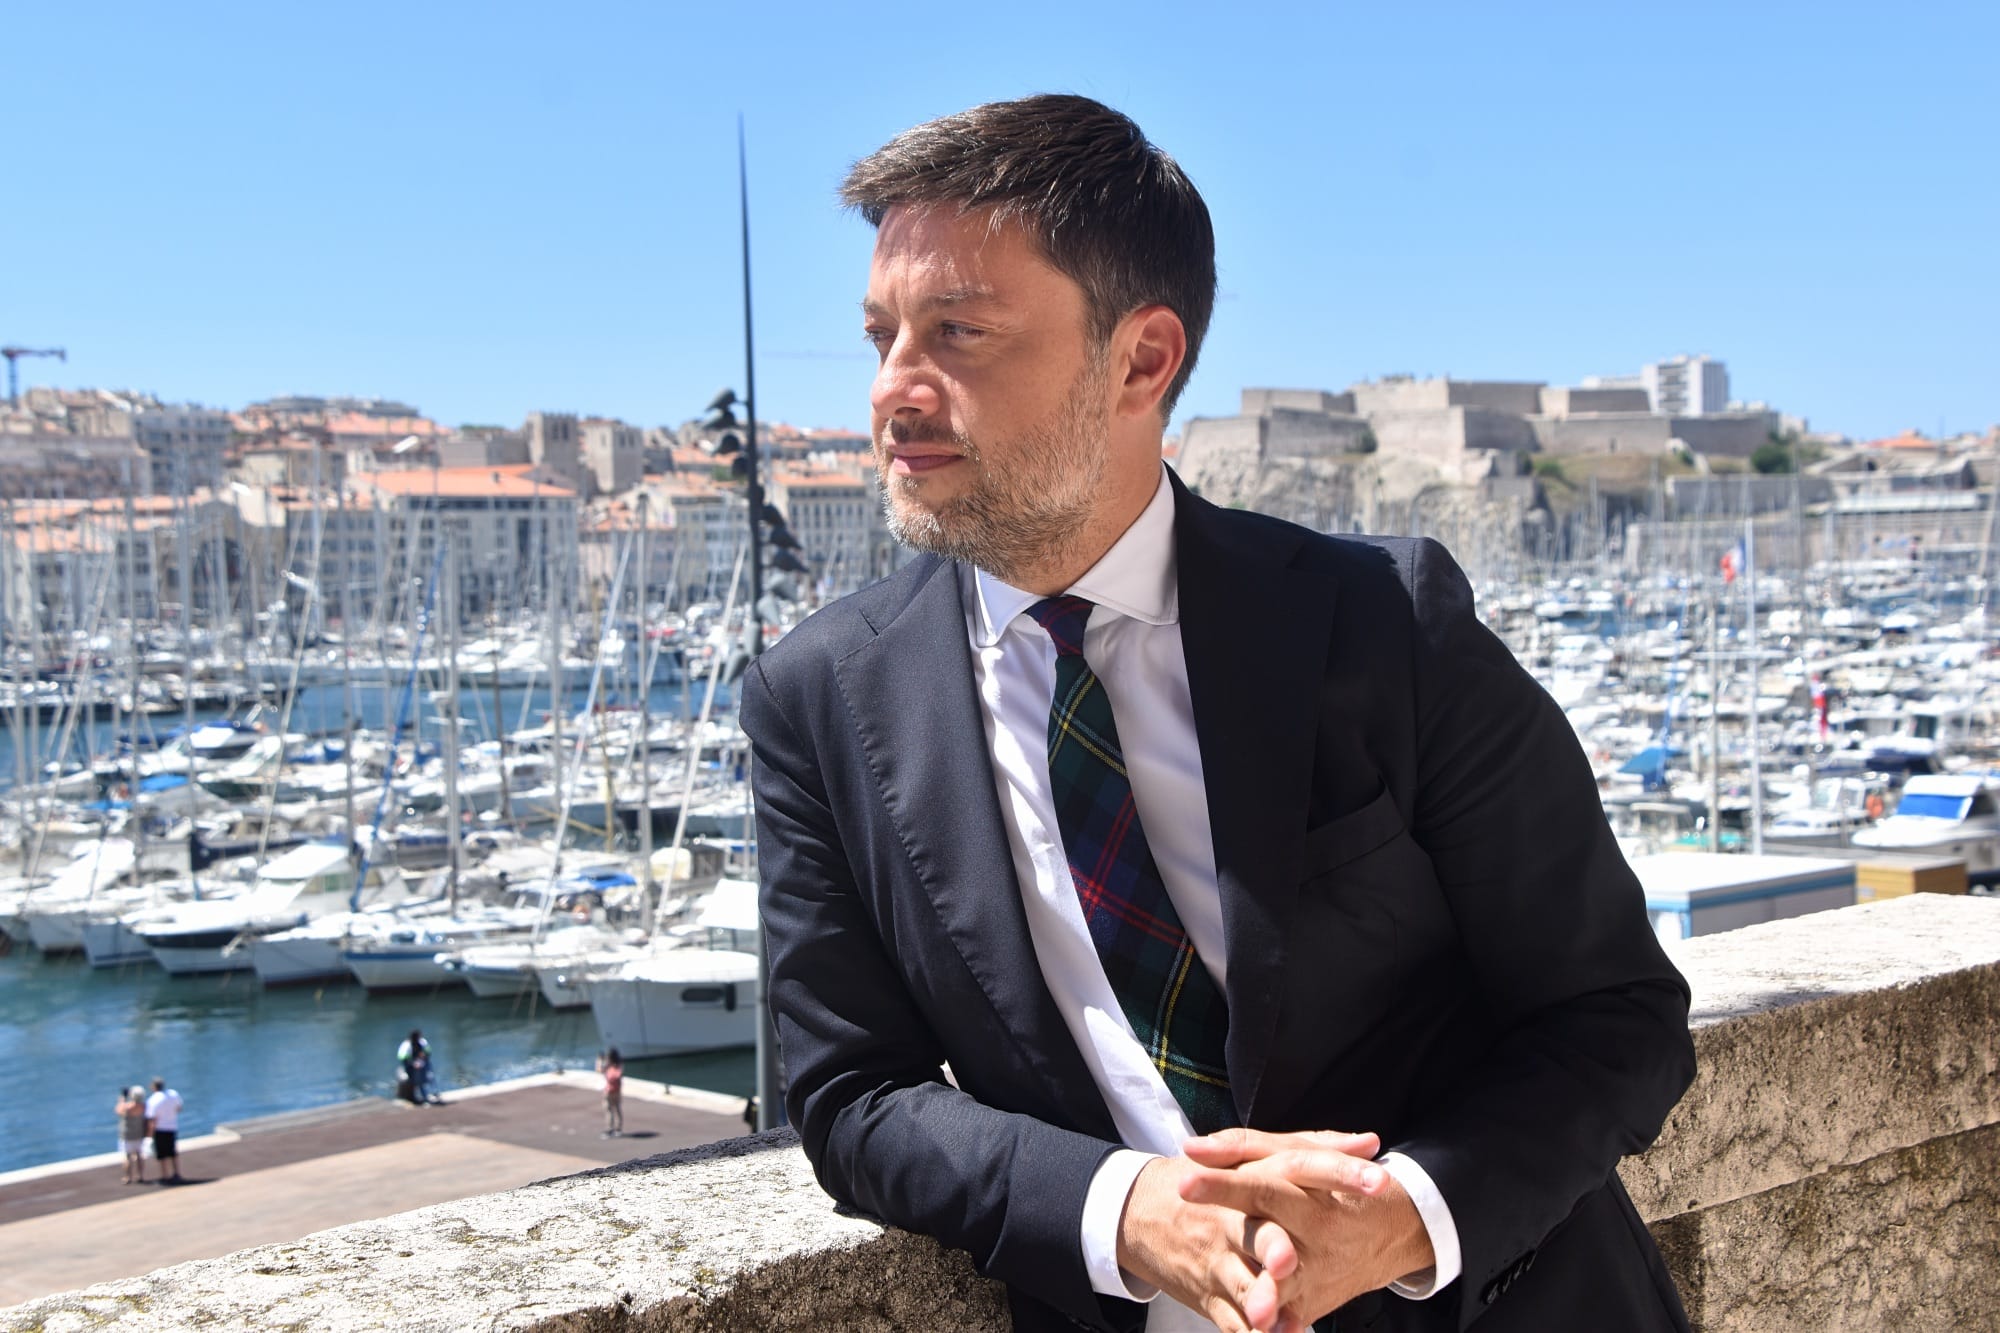 office de tourisme, Benoît Payan prend la présidence de l’Office de Tourisme de Marseille, Made in Marseille